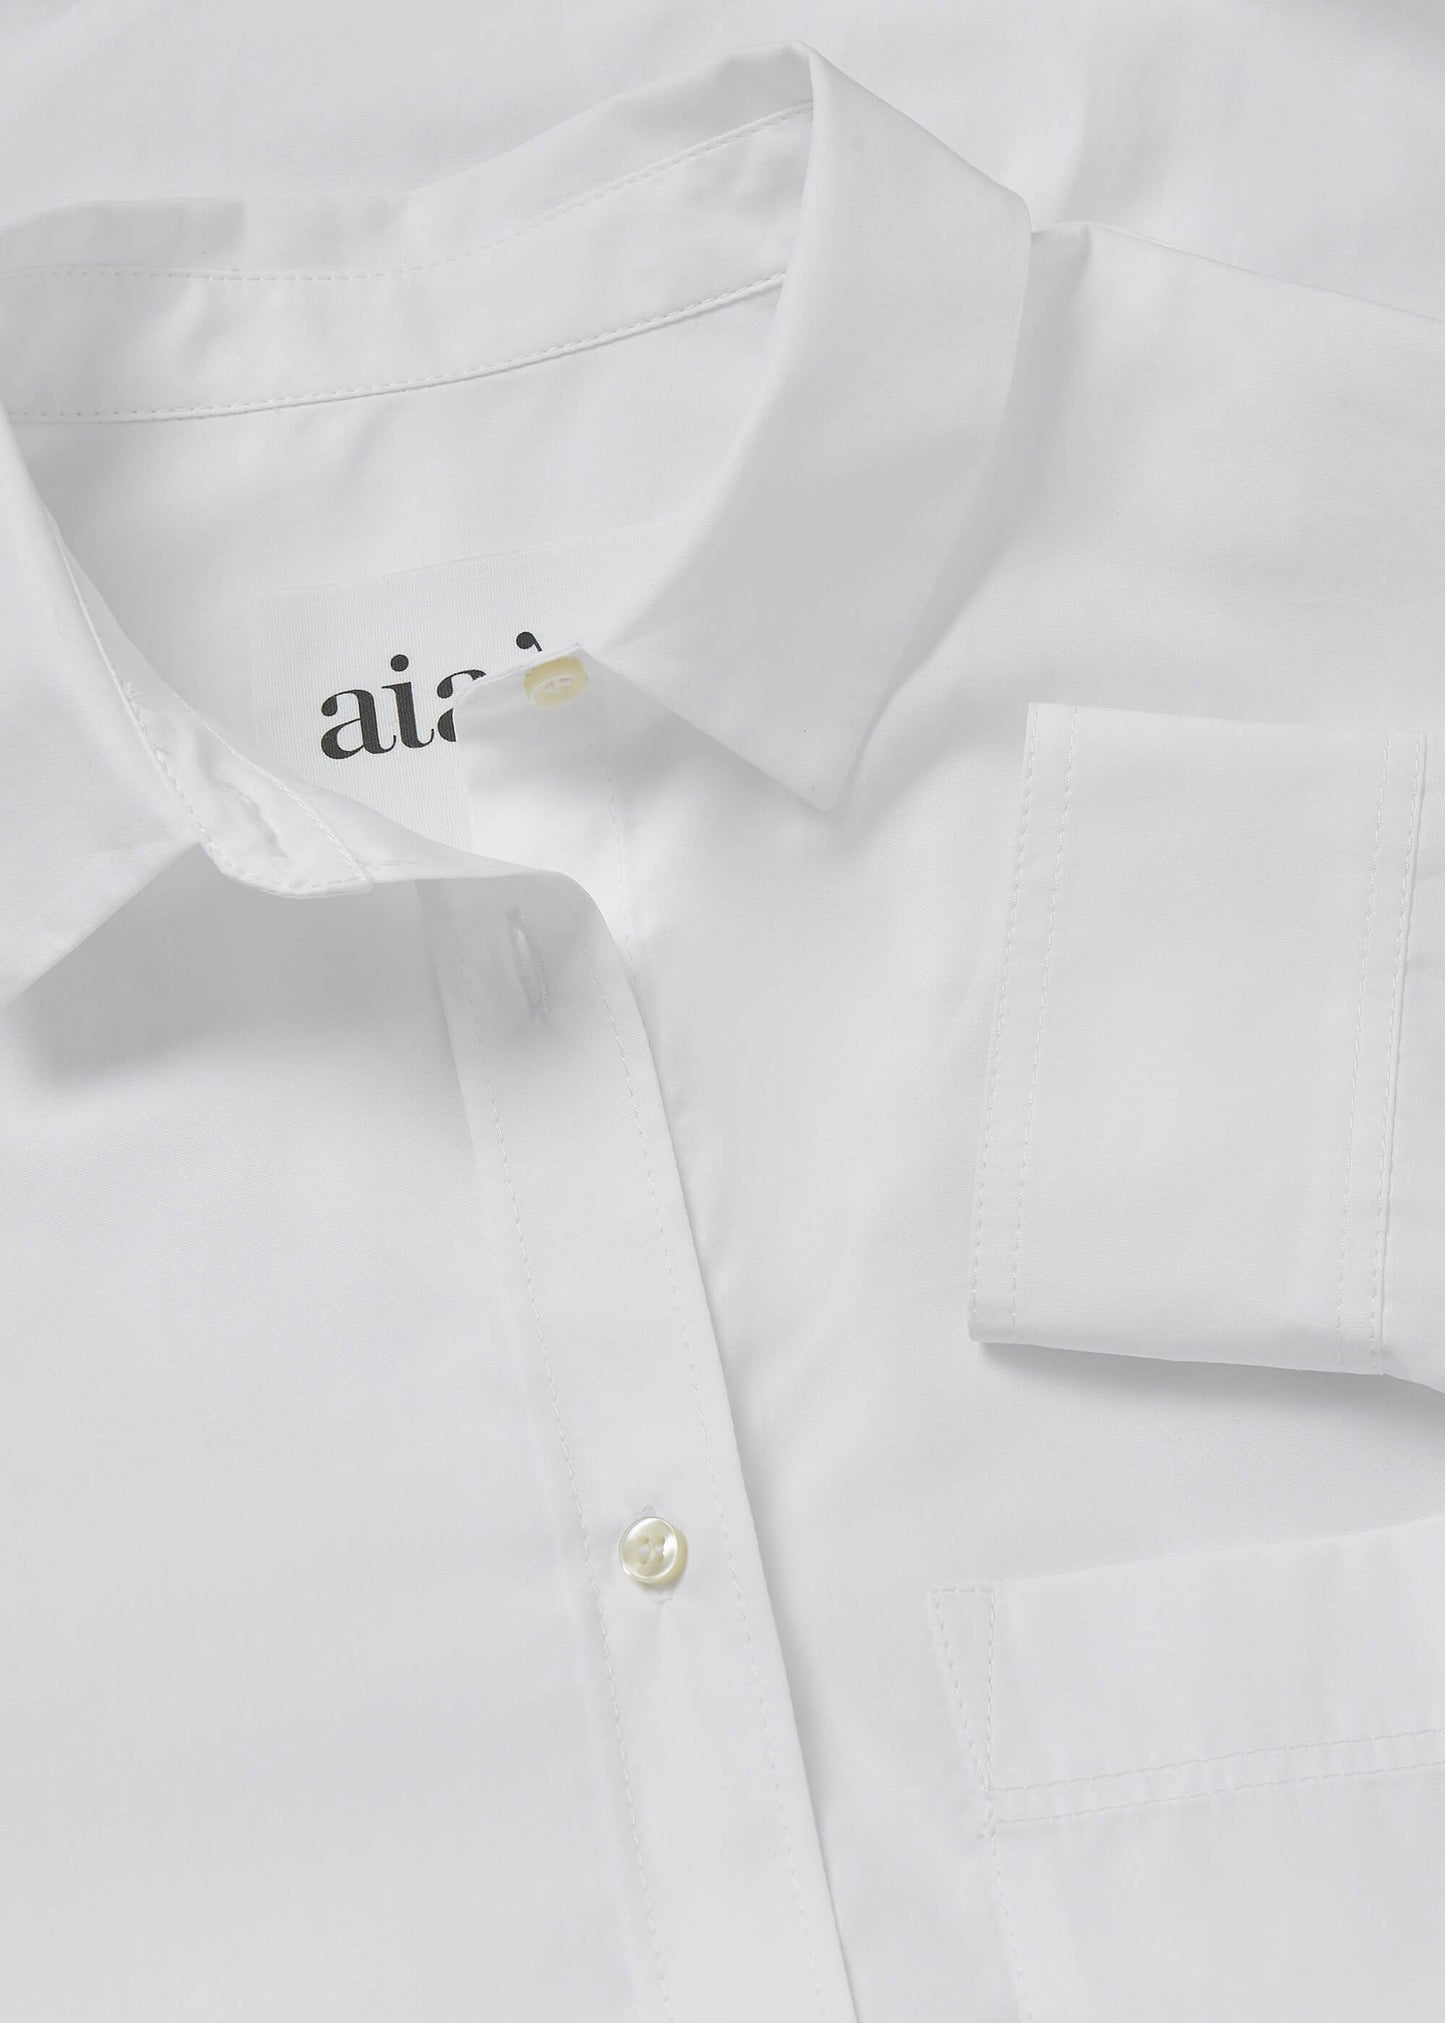 Aiayu "Philo Shirt Tailored" White